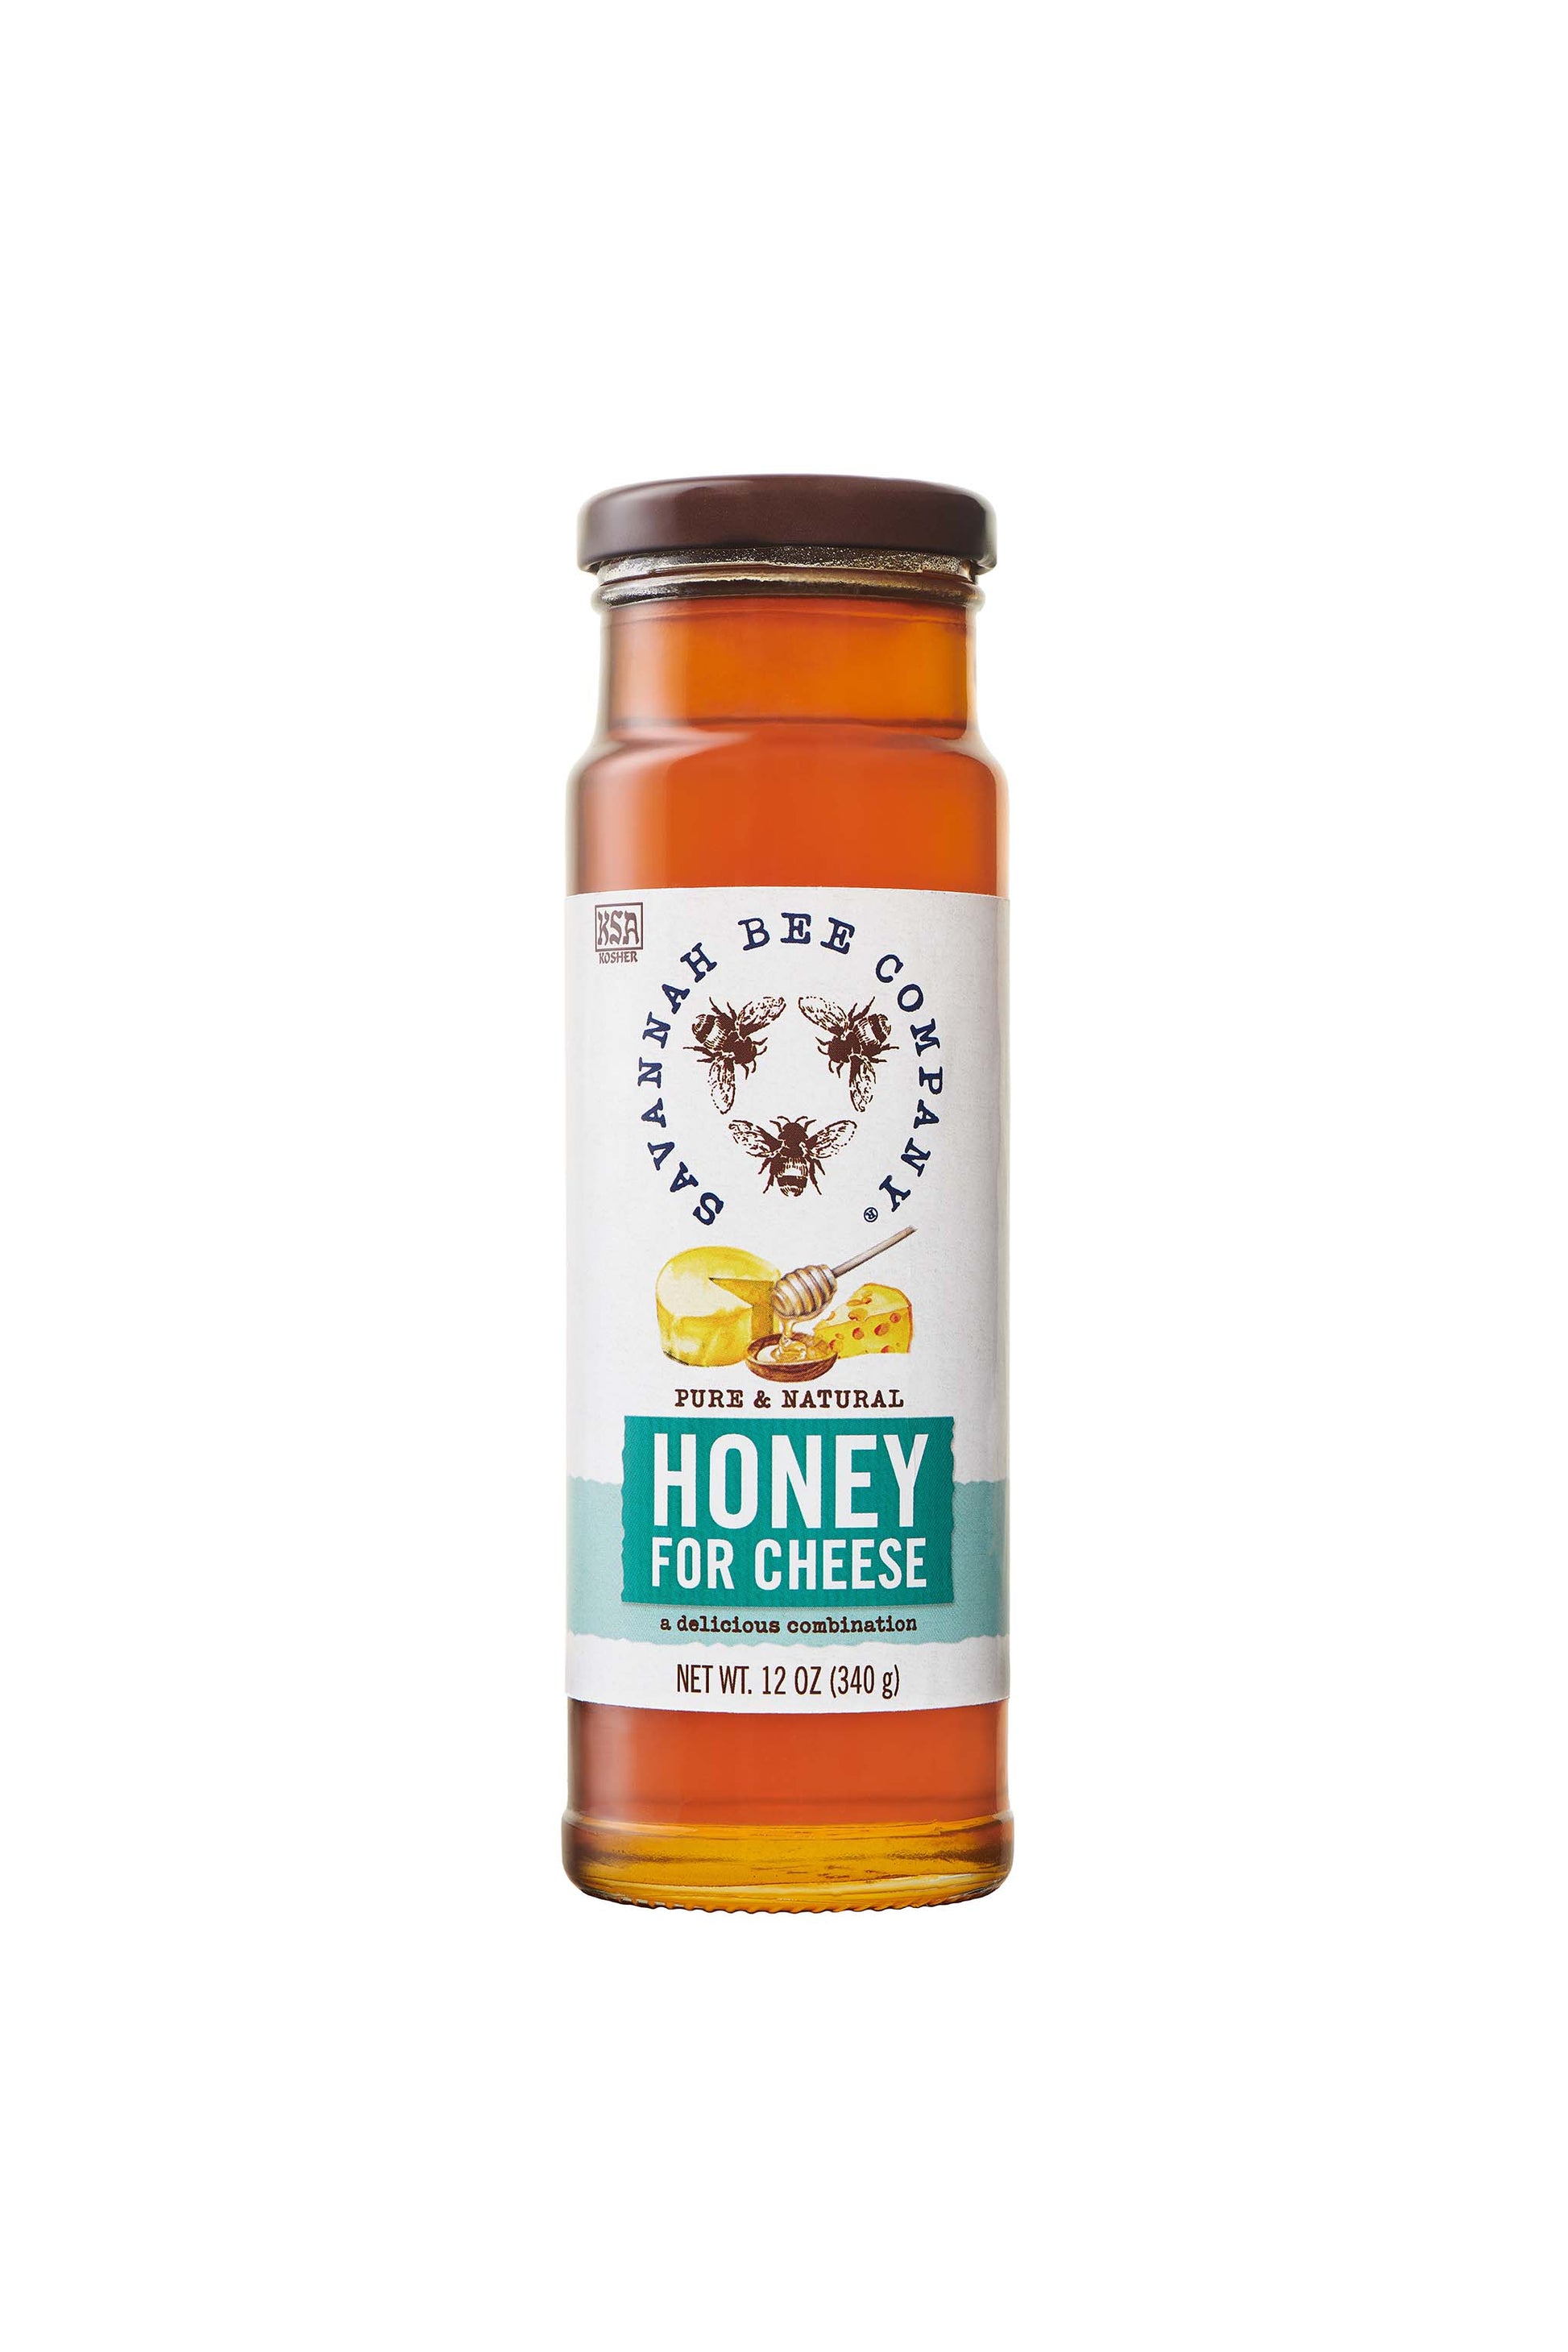 12 ounce honey for cheese jar studio shot